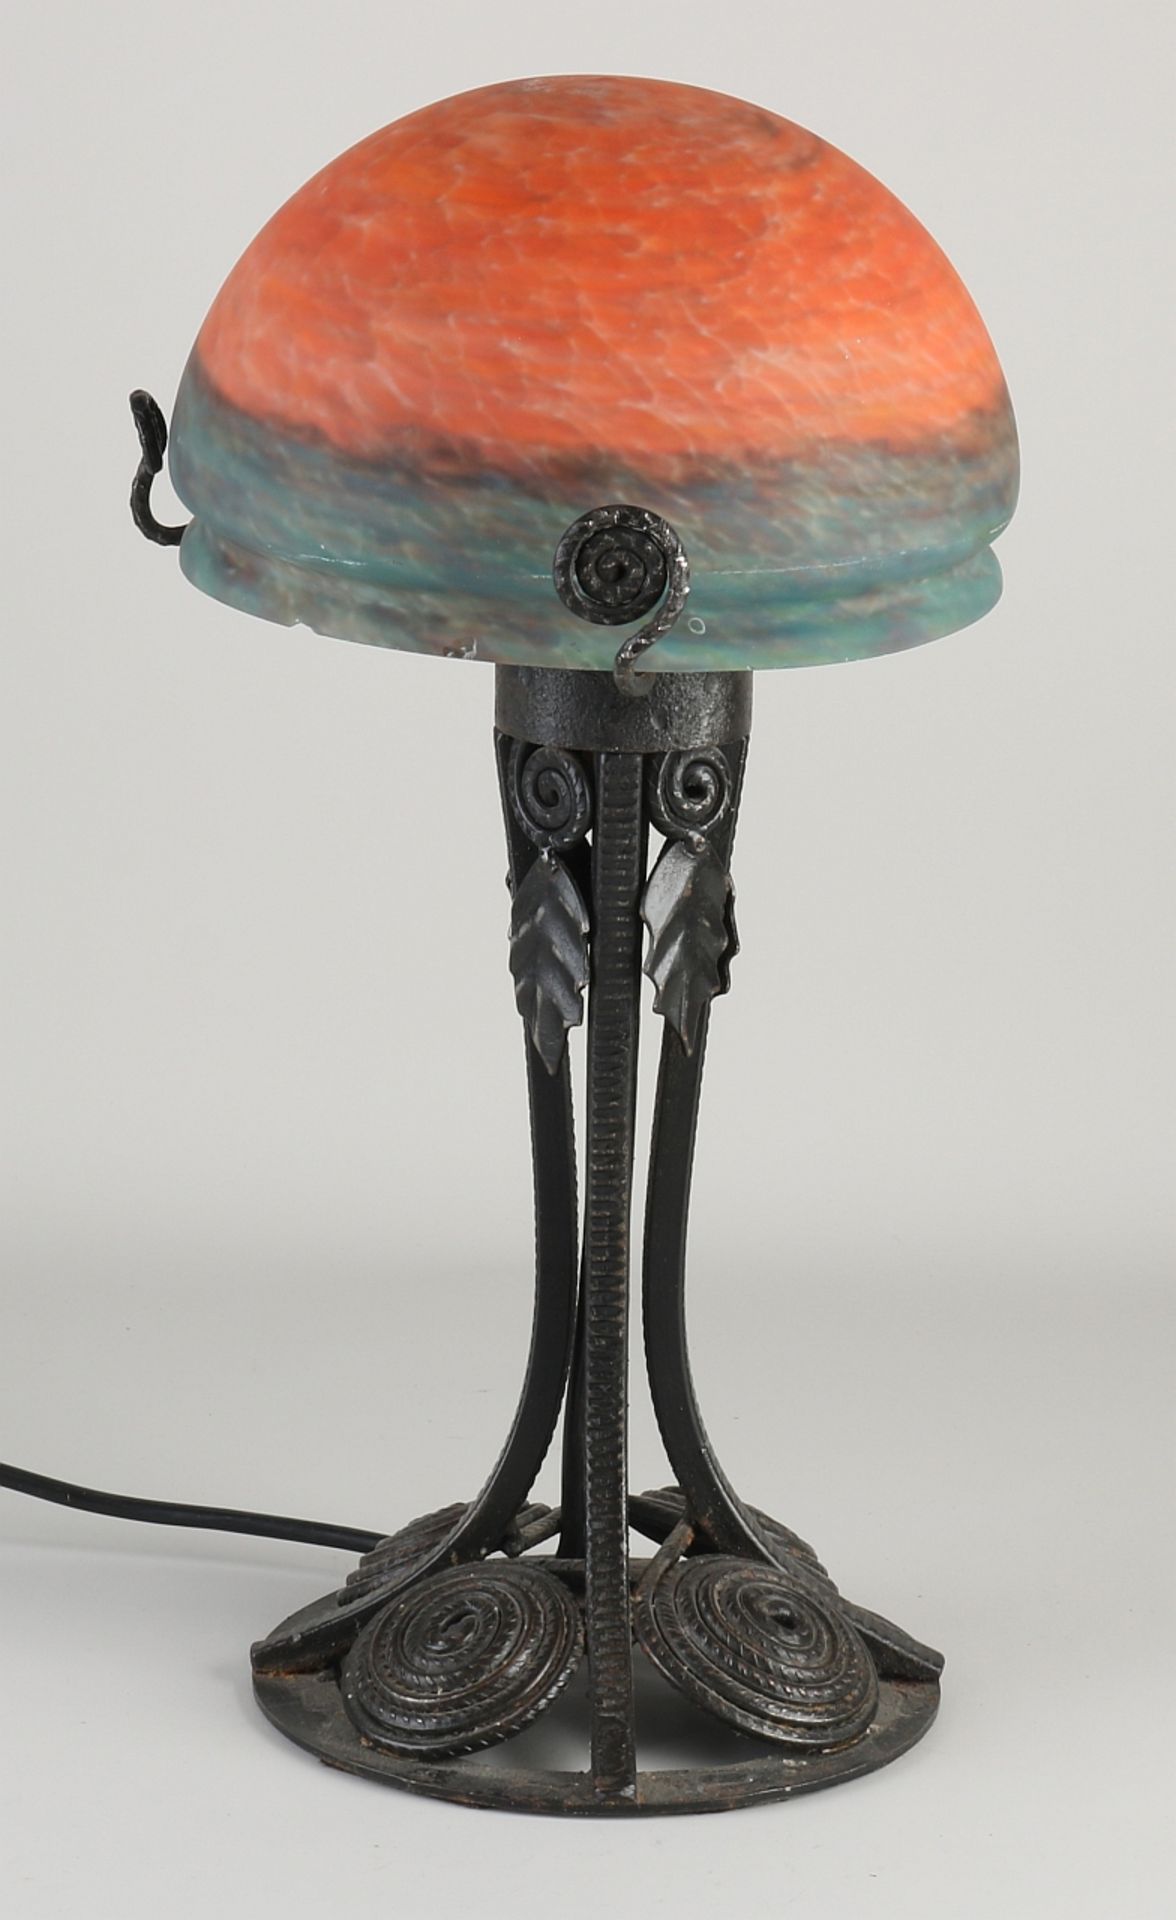 Wrought iron lamp base, H 41 cm.